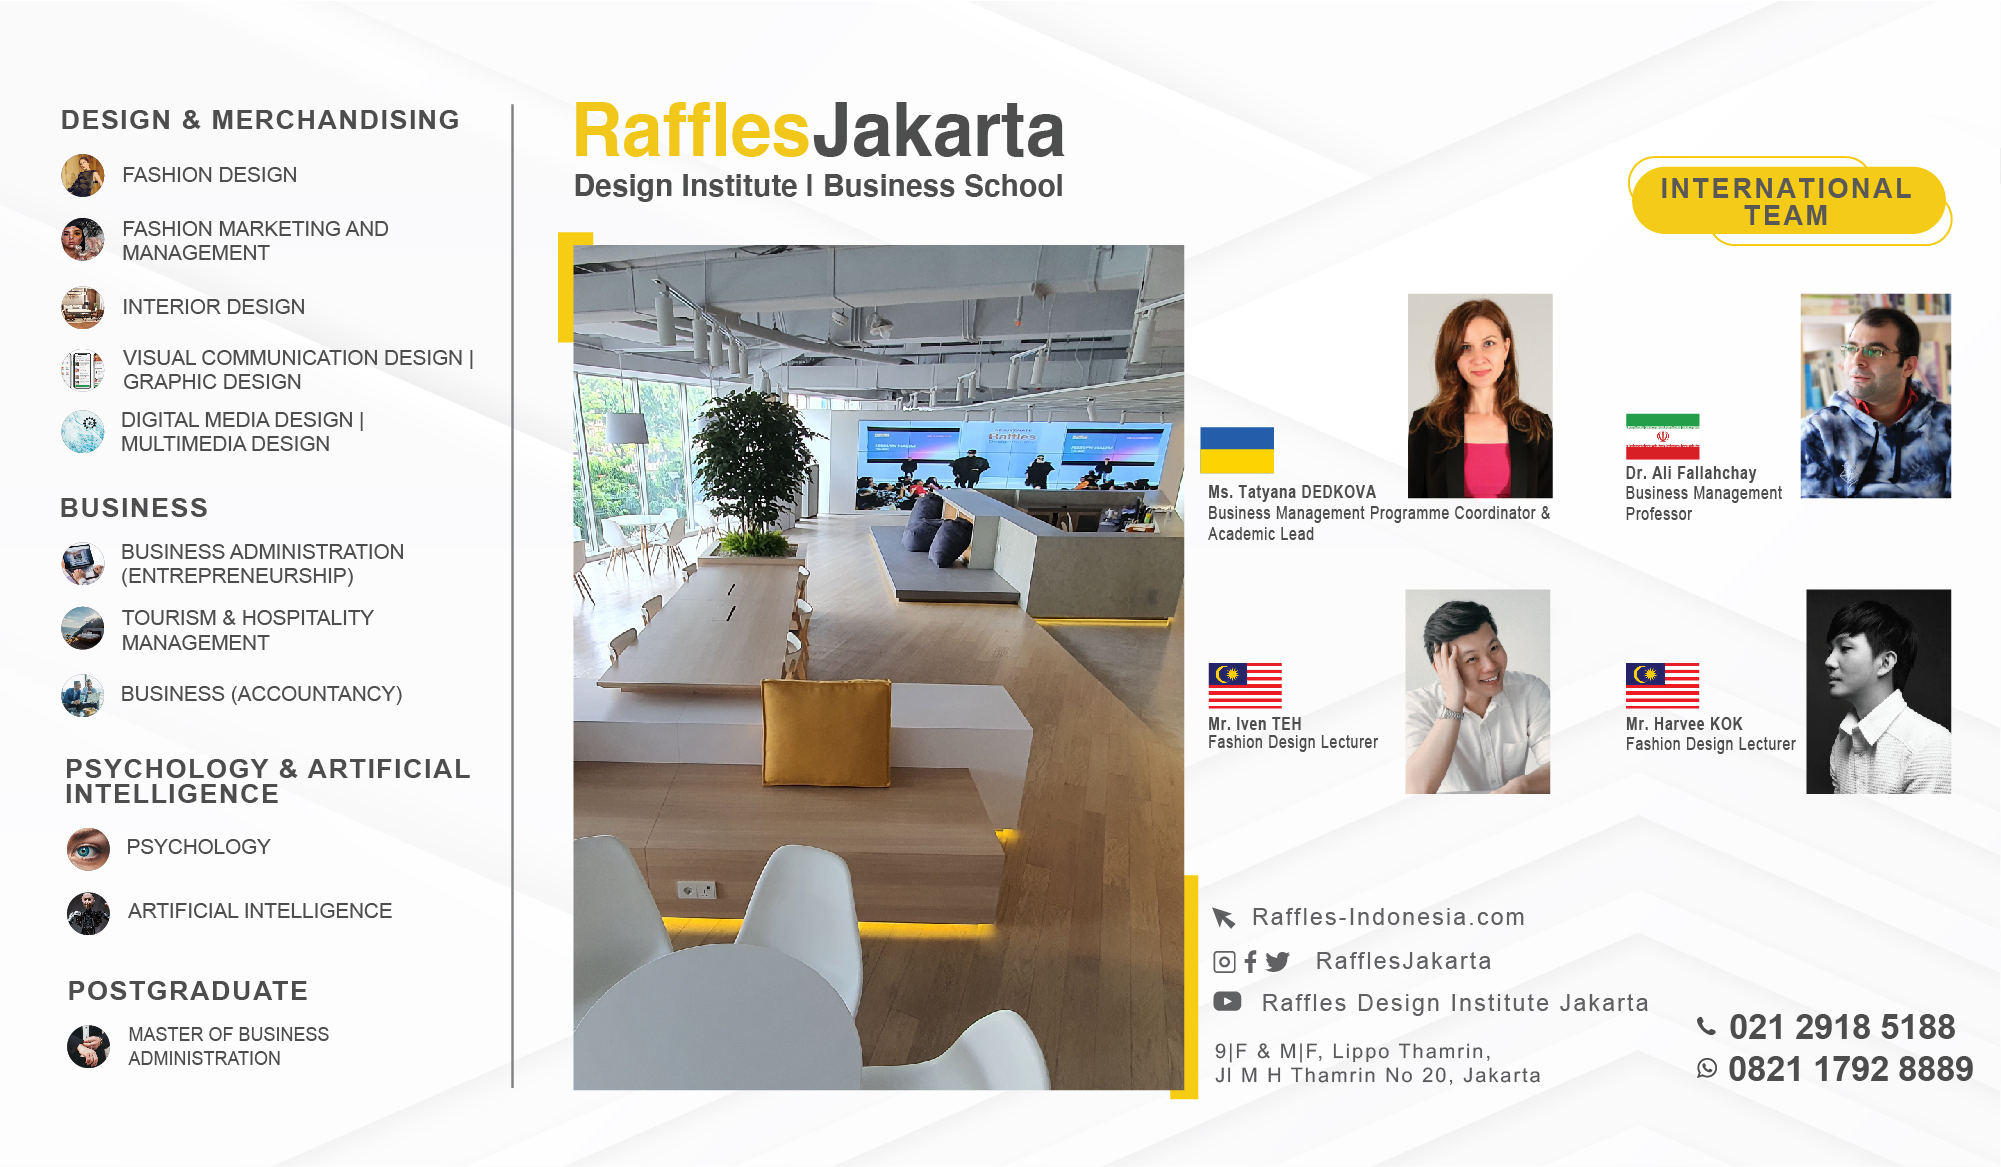 RAFFLES JAKARTA INTERNATIONAL DESIGN AND BUSINESS SCHOOL